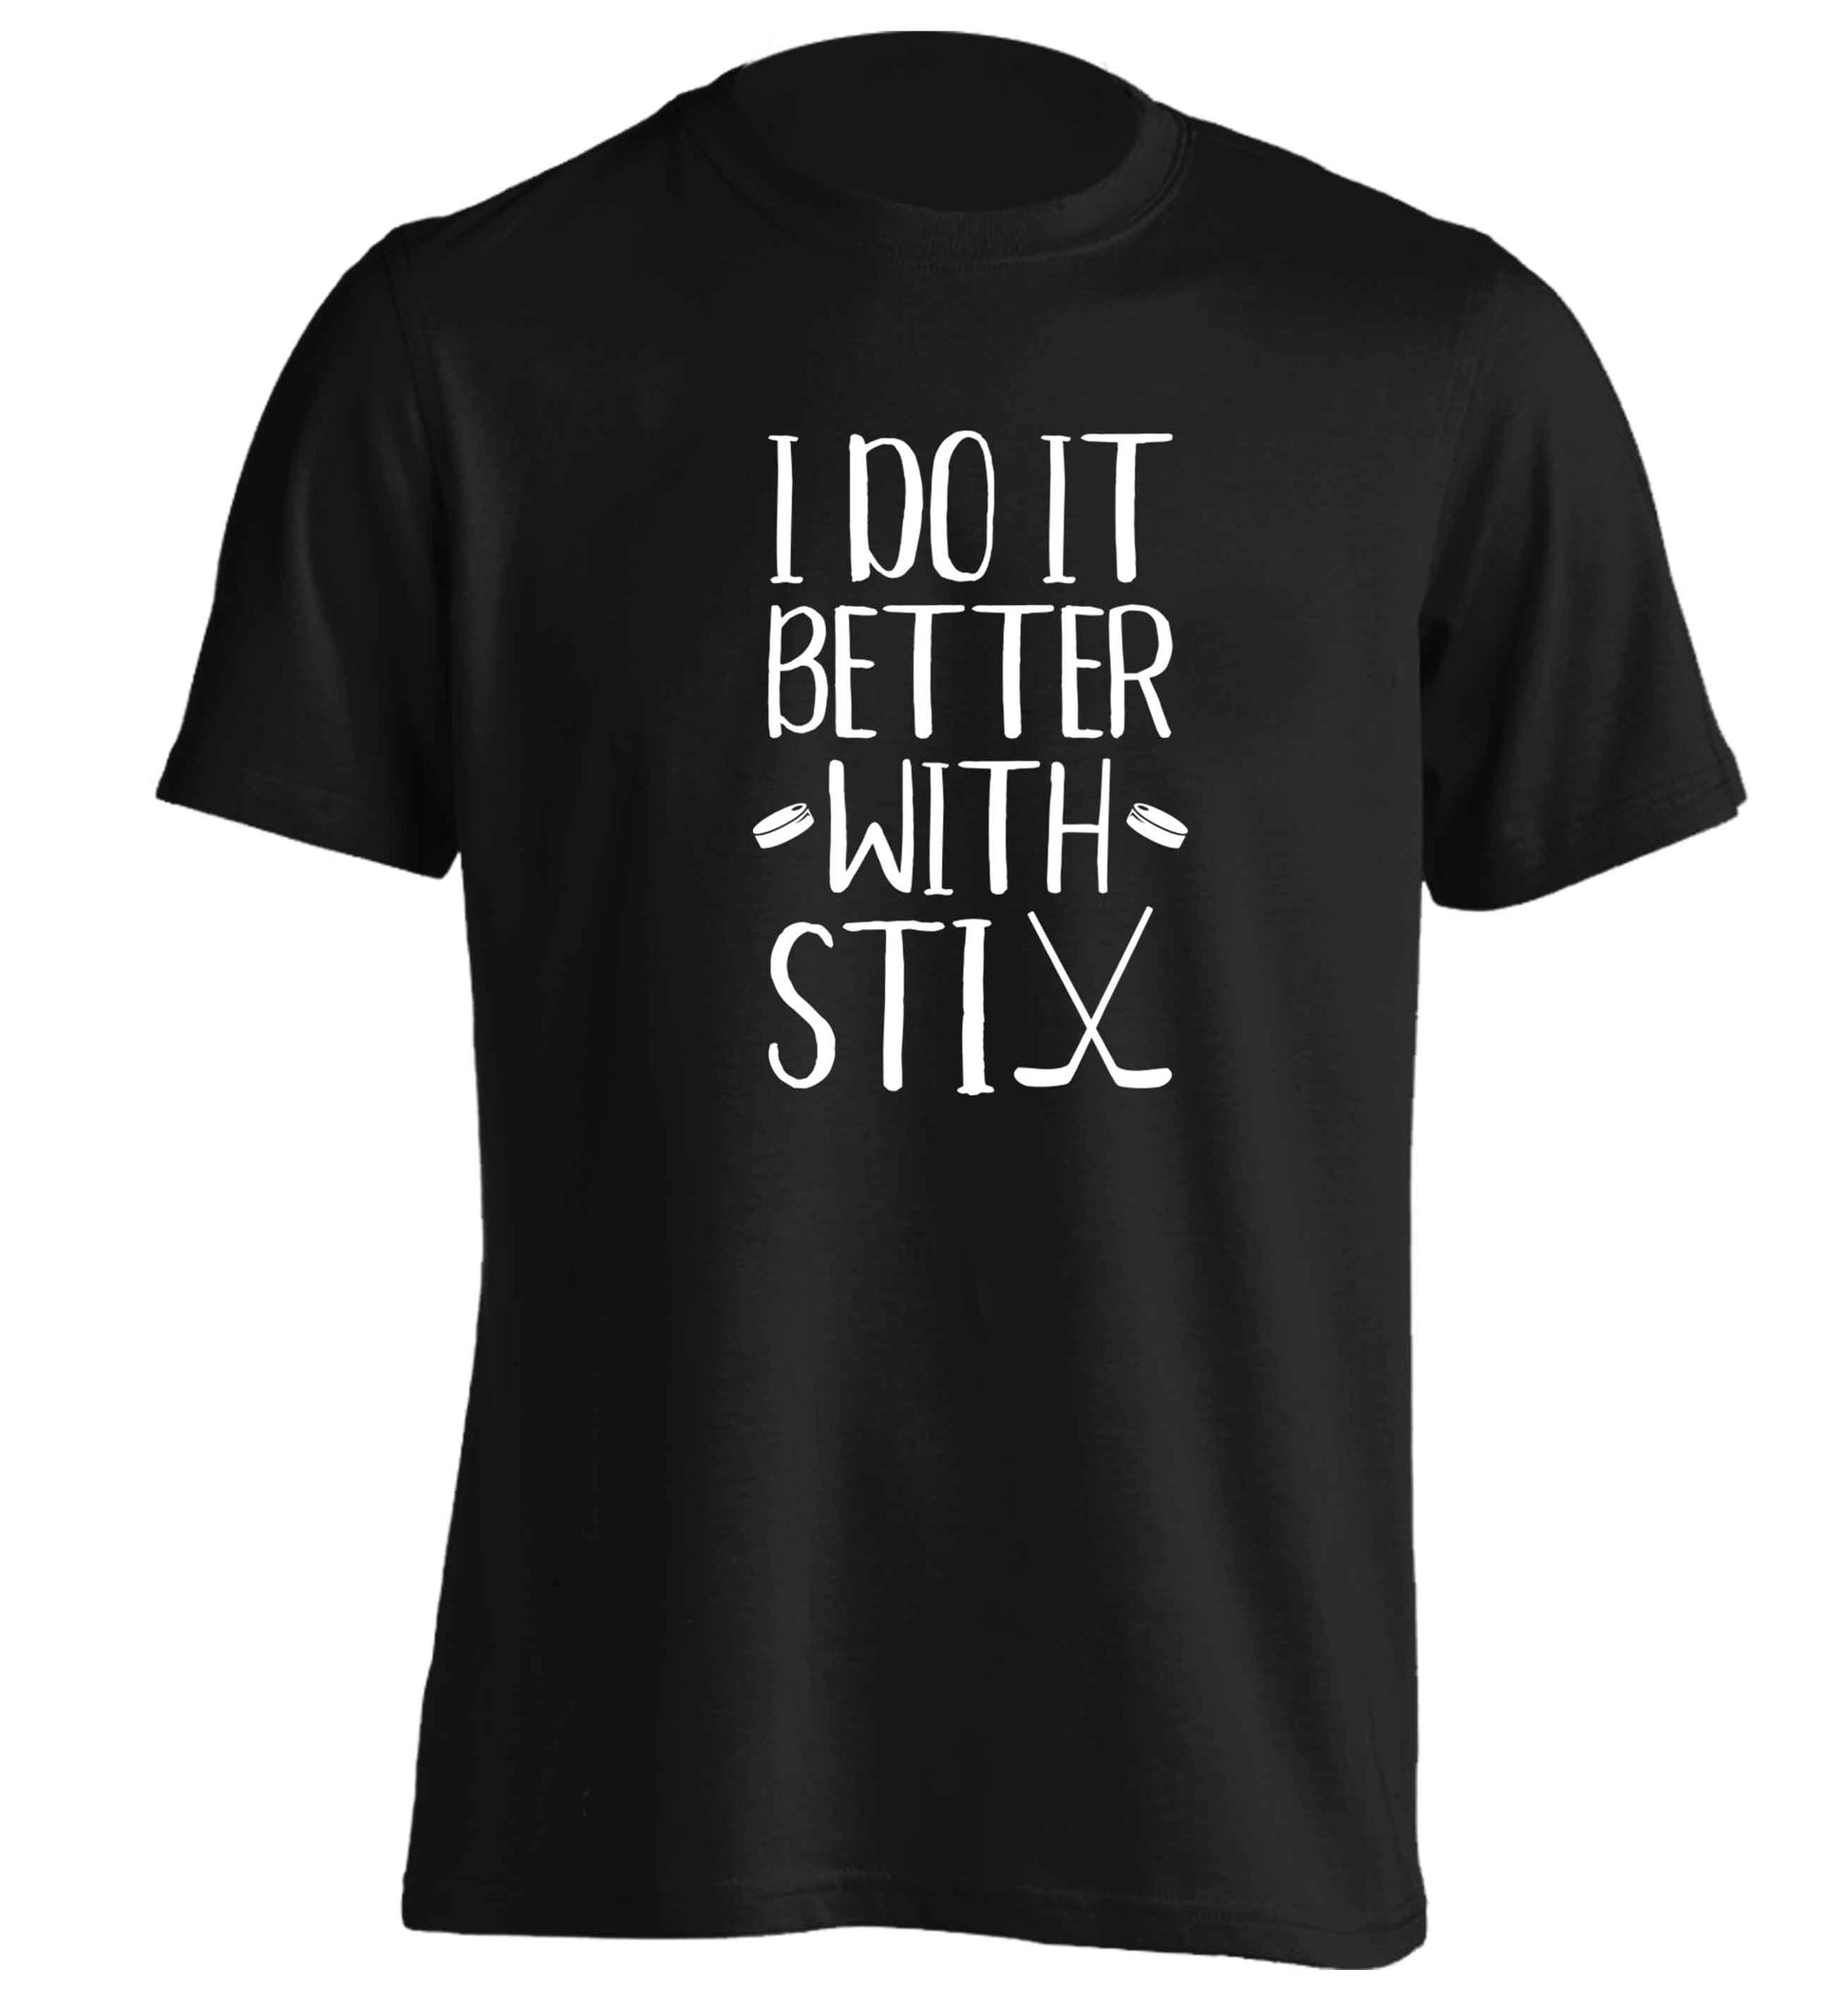 I do it better with stix (hockey) adults unisex black Tshirt 2XL